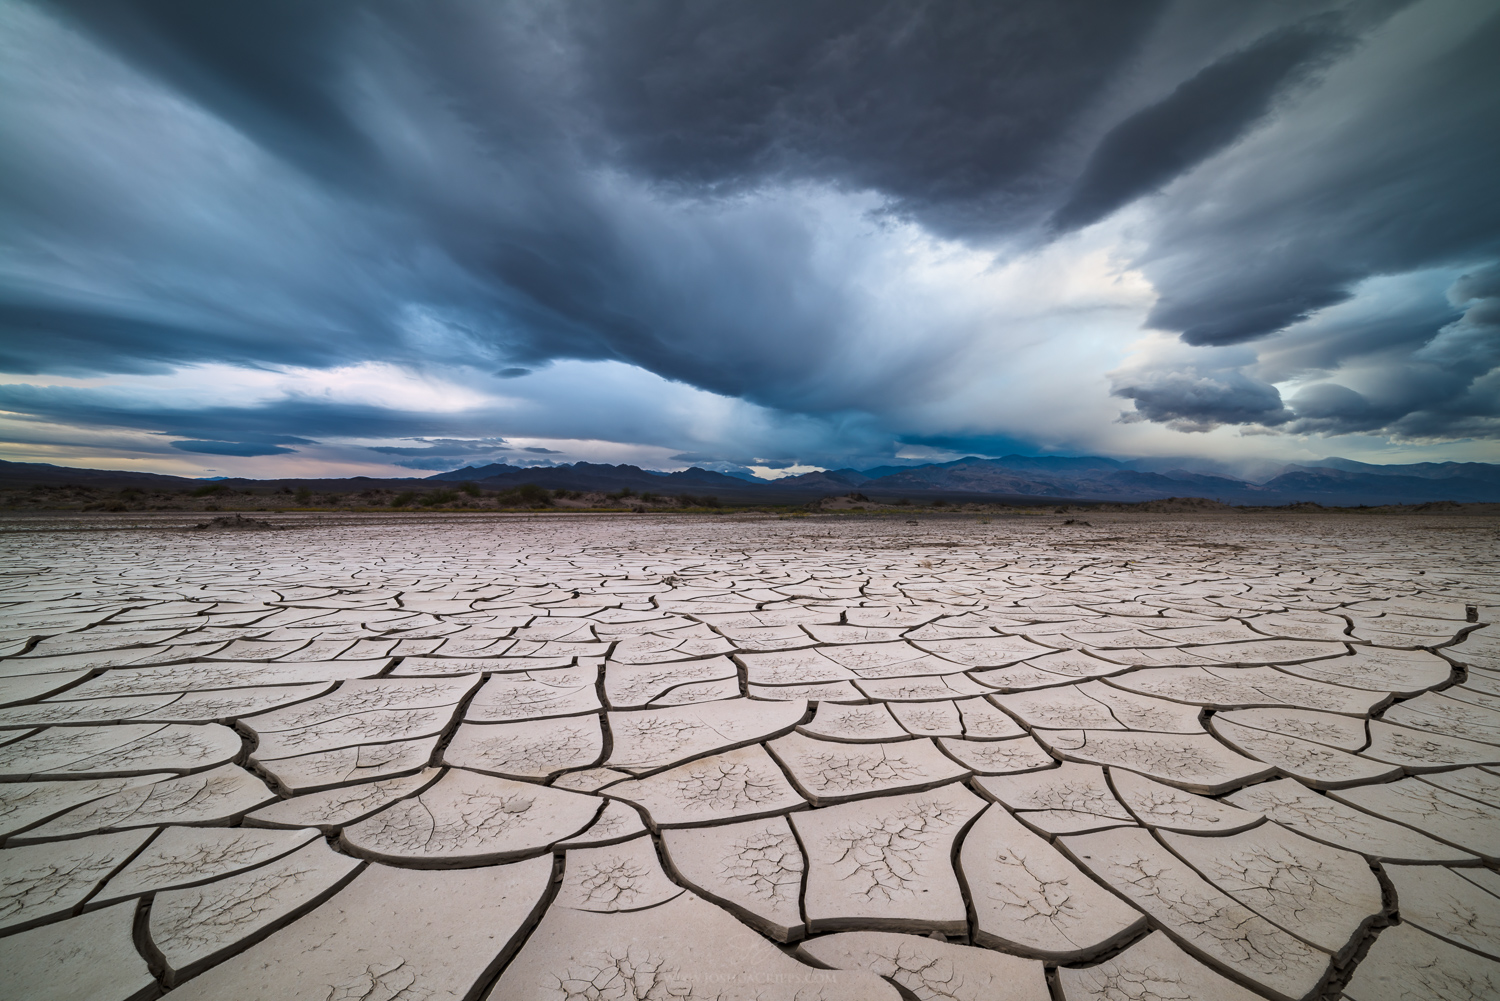 Apocalypse Wow - Mud Cracks & Storm Clouds, Death Valley